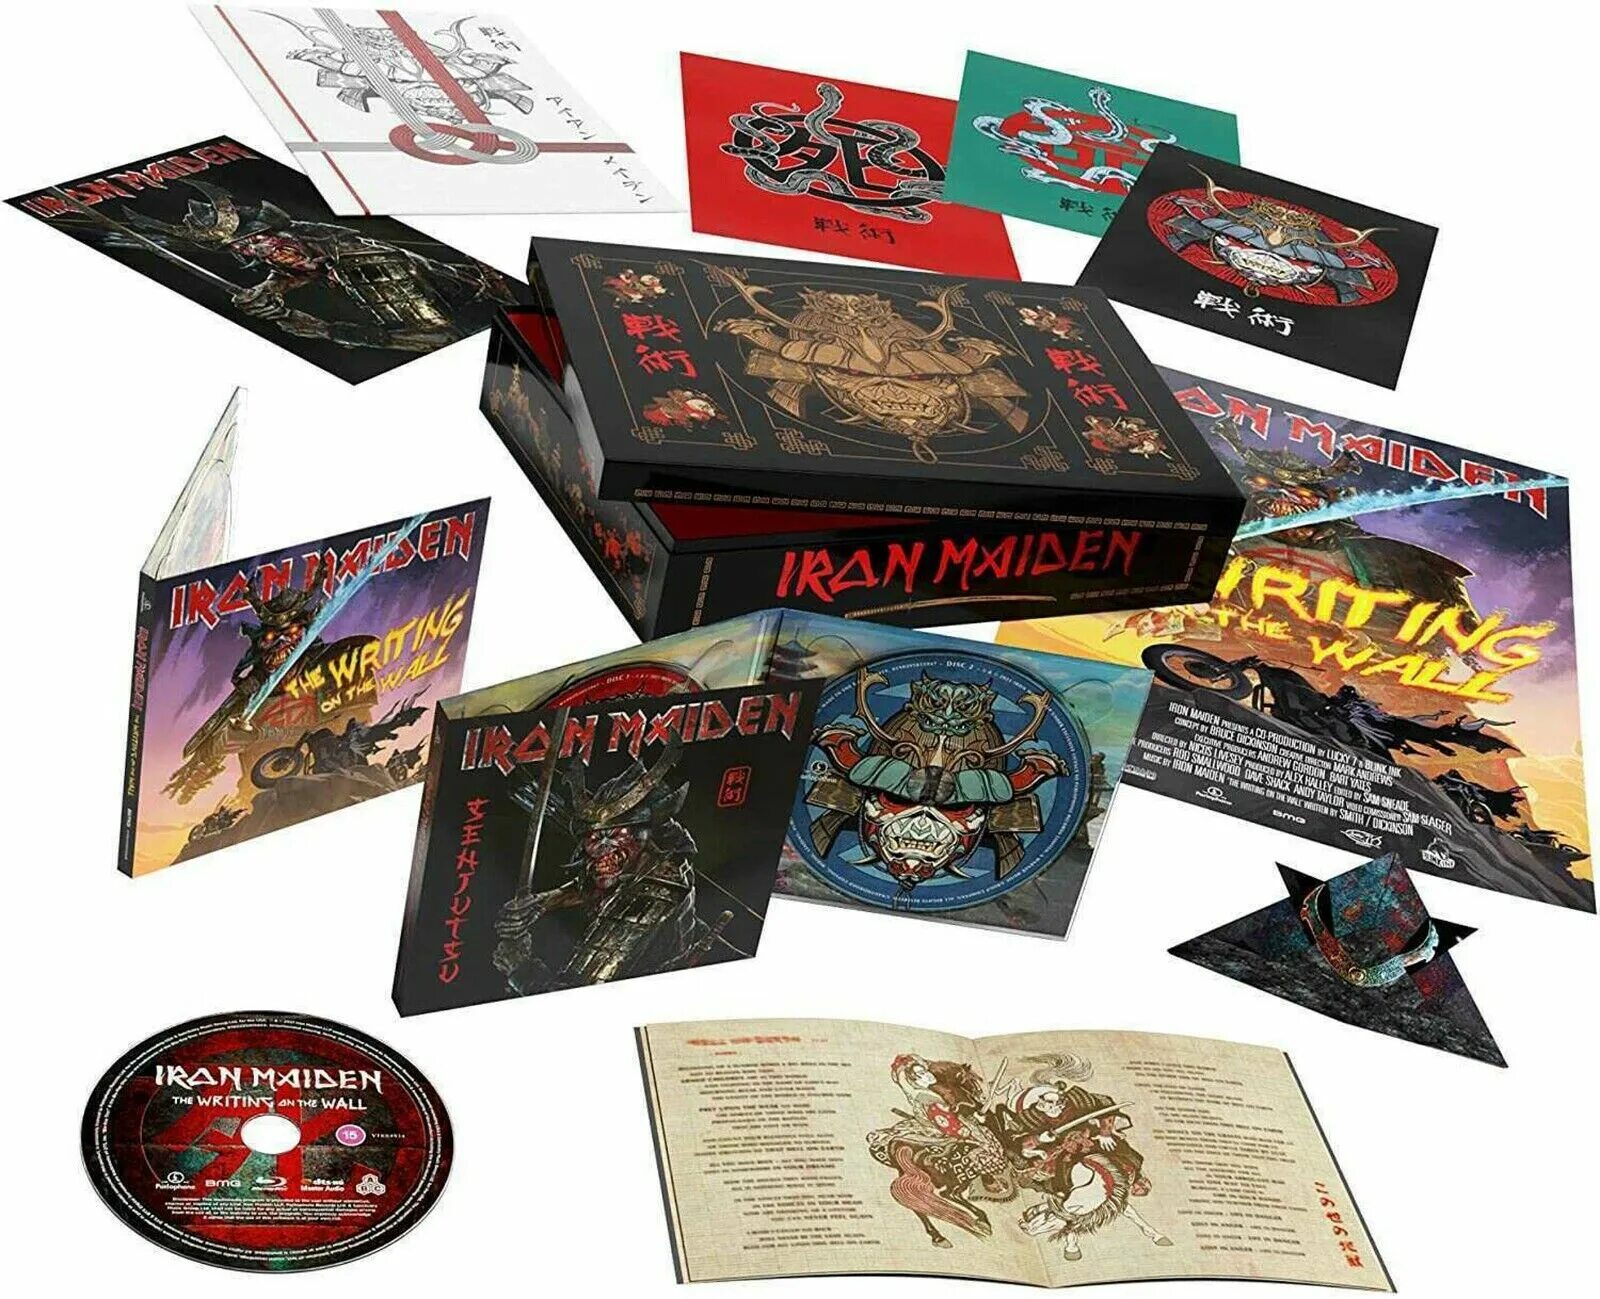 Iron Maiden 15 CD Box Set. Iron Maiden CD Box. Iron Maiden Senjutsu 2021. Iron Maiden CD Box Set 12 альбомов бокс-сет.